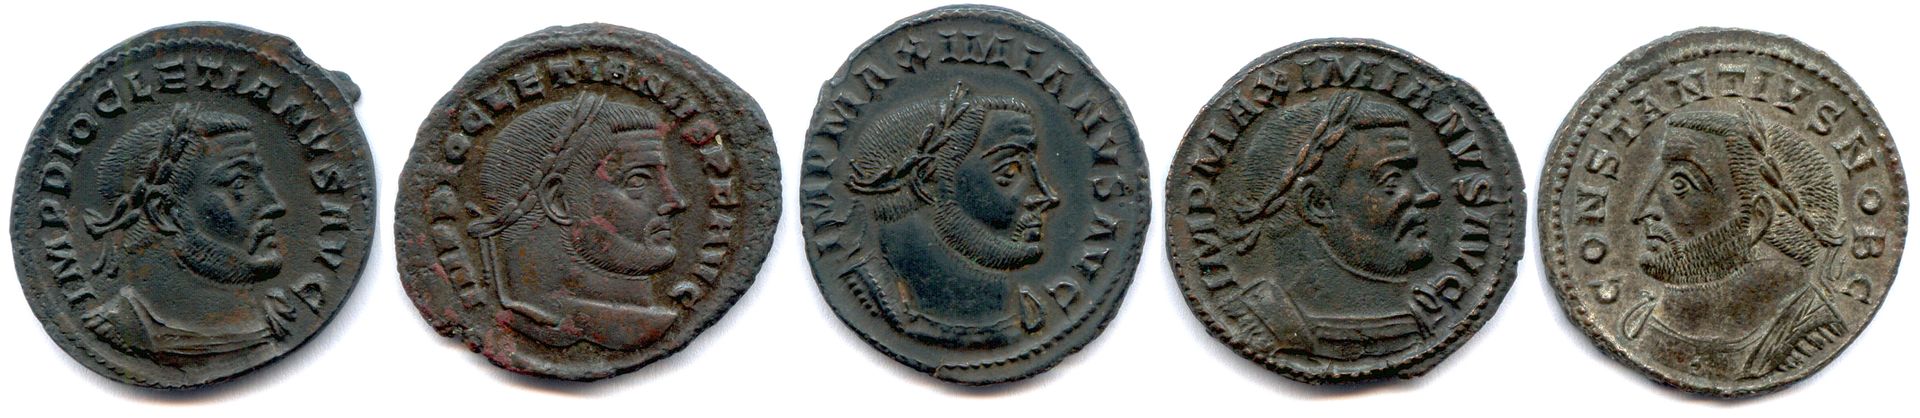 Null IMPERIO ROMANO 

Cinco monedas de bronce romanas (Folles): 

Diocleciano, M&hellip;